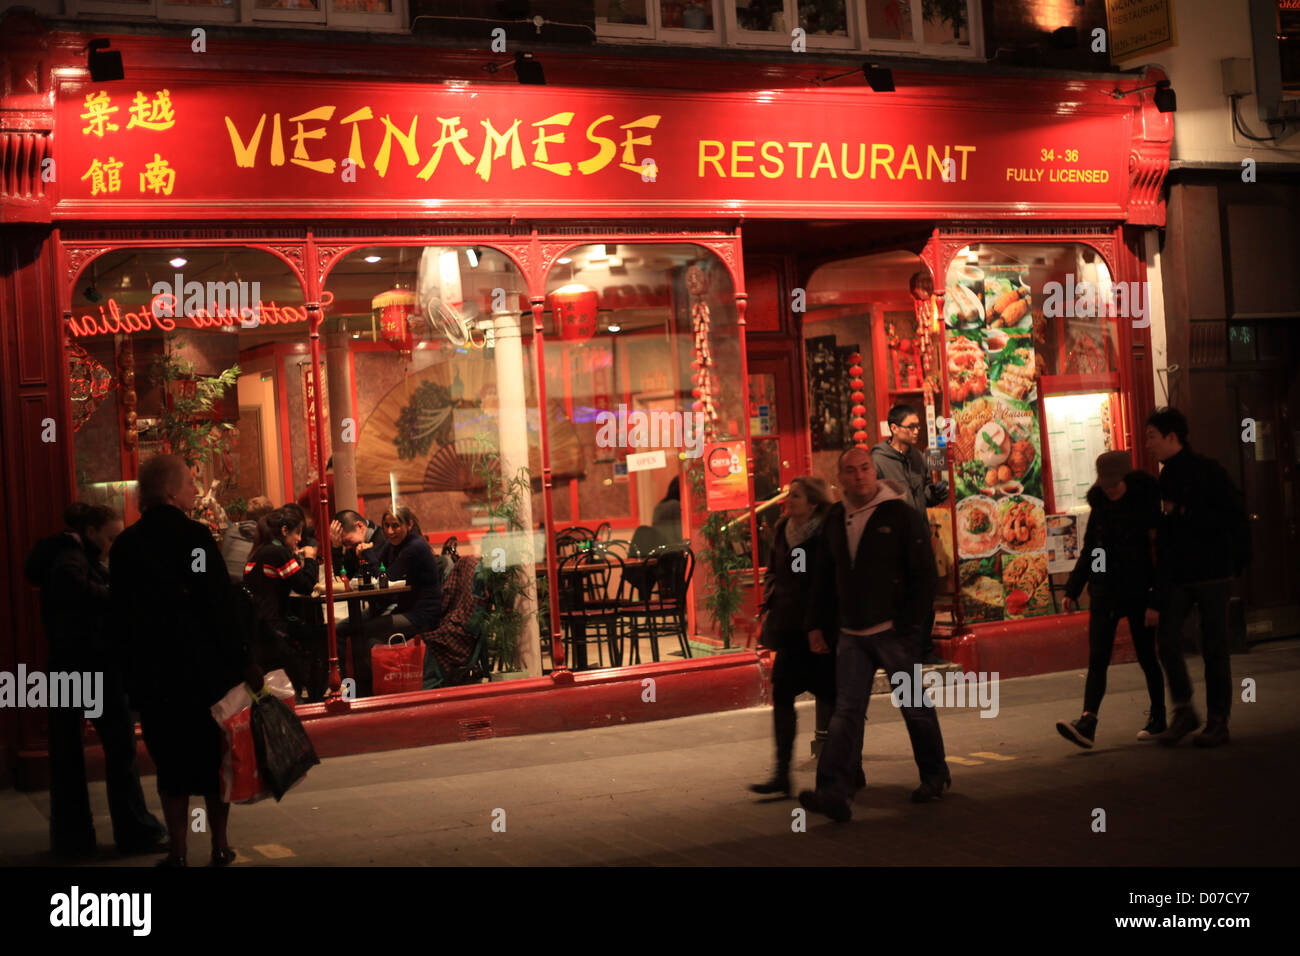 Vietnamese restaurant in central London Stock Photo